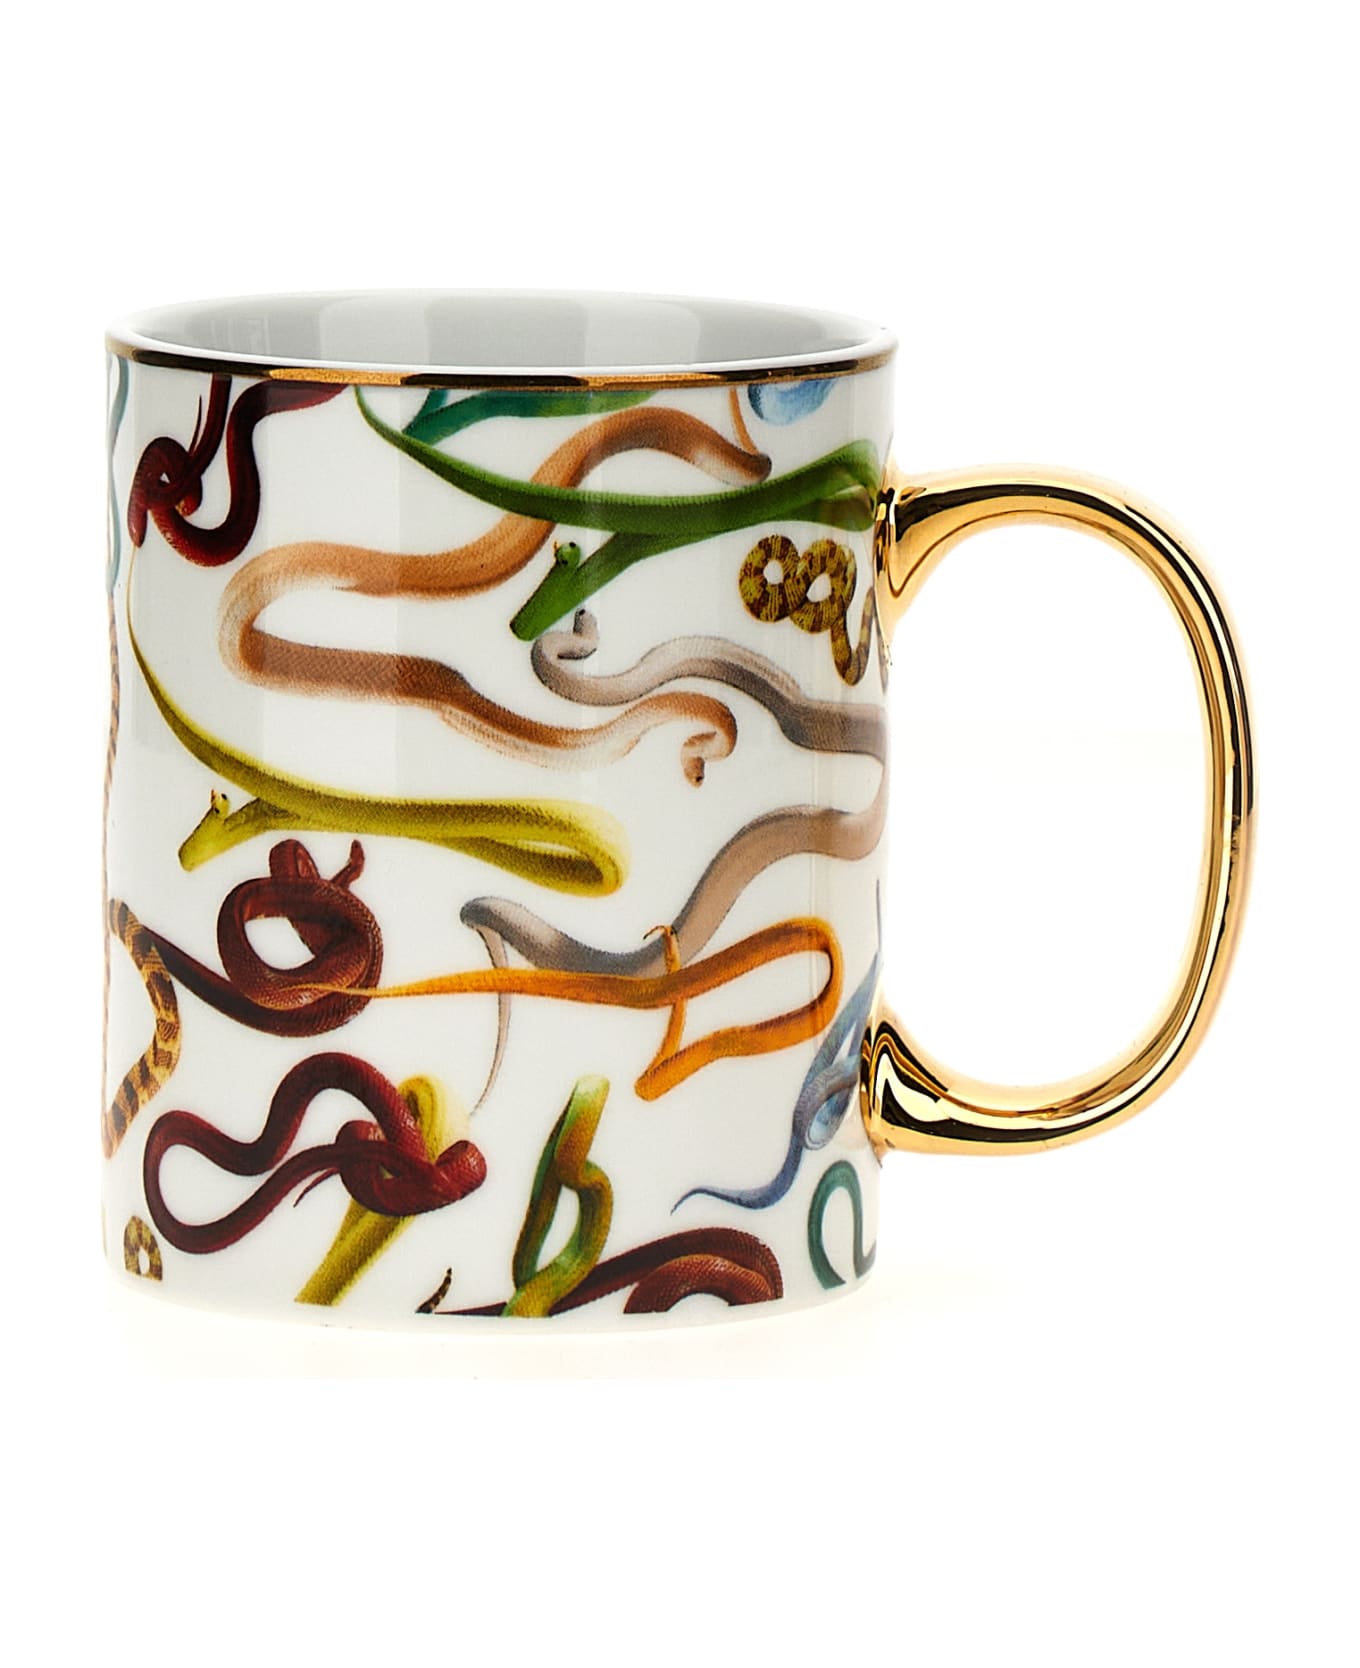 Seletti X Toiletpaper 'snakes' Cup - Multicolor